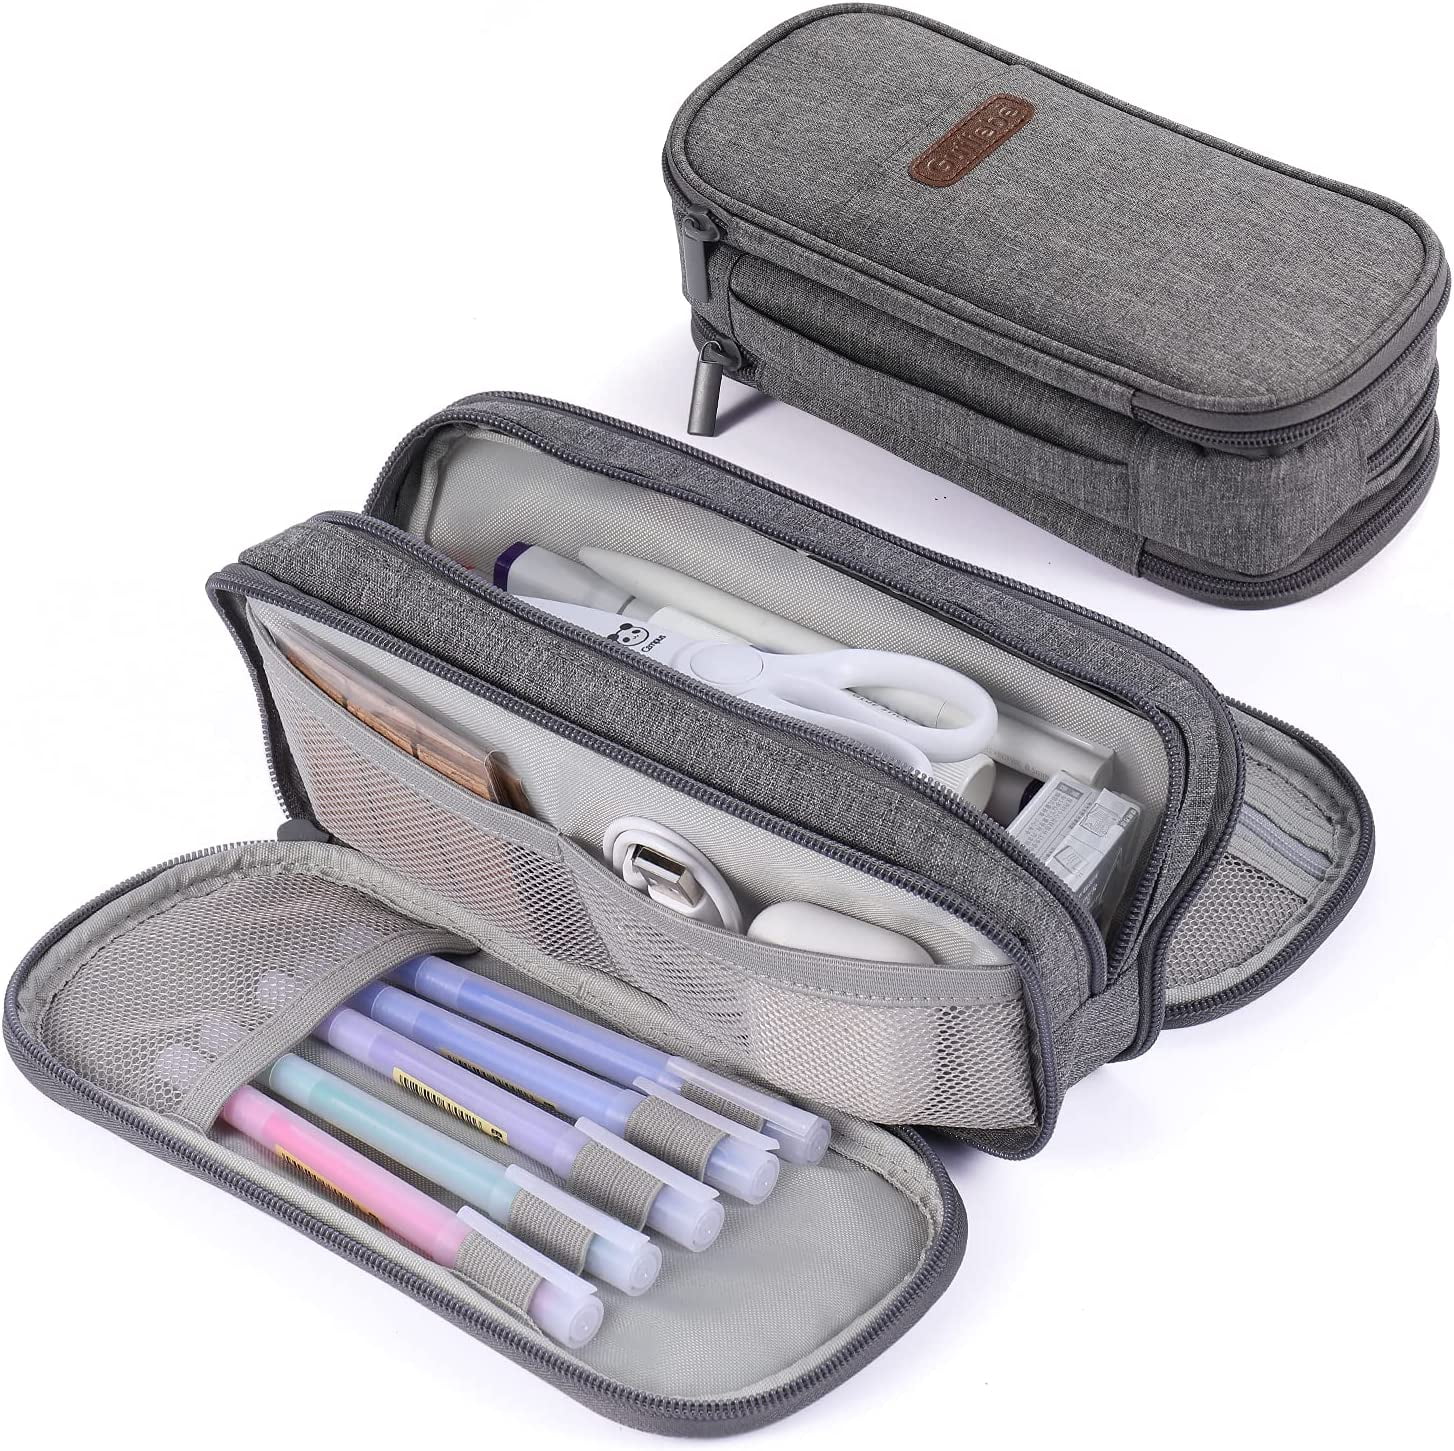  CICIMELON Large Capacity Pen Case Black, 3 Compartments Pink  Pencil Case Pouch Bag : Office Products